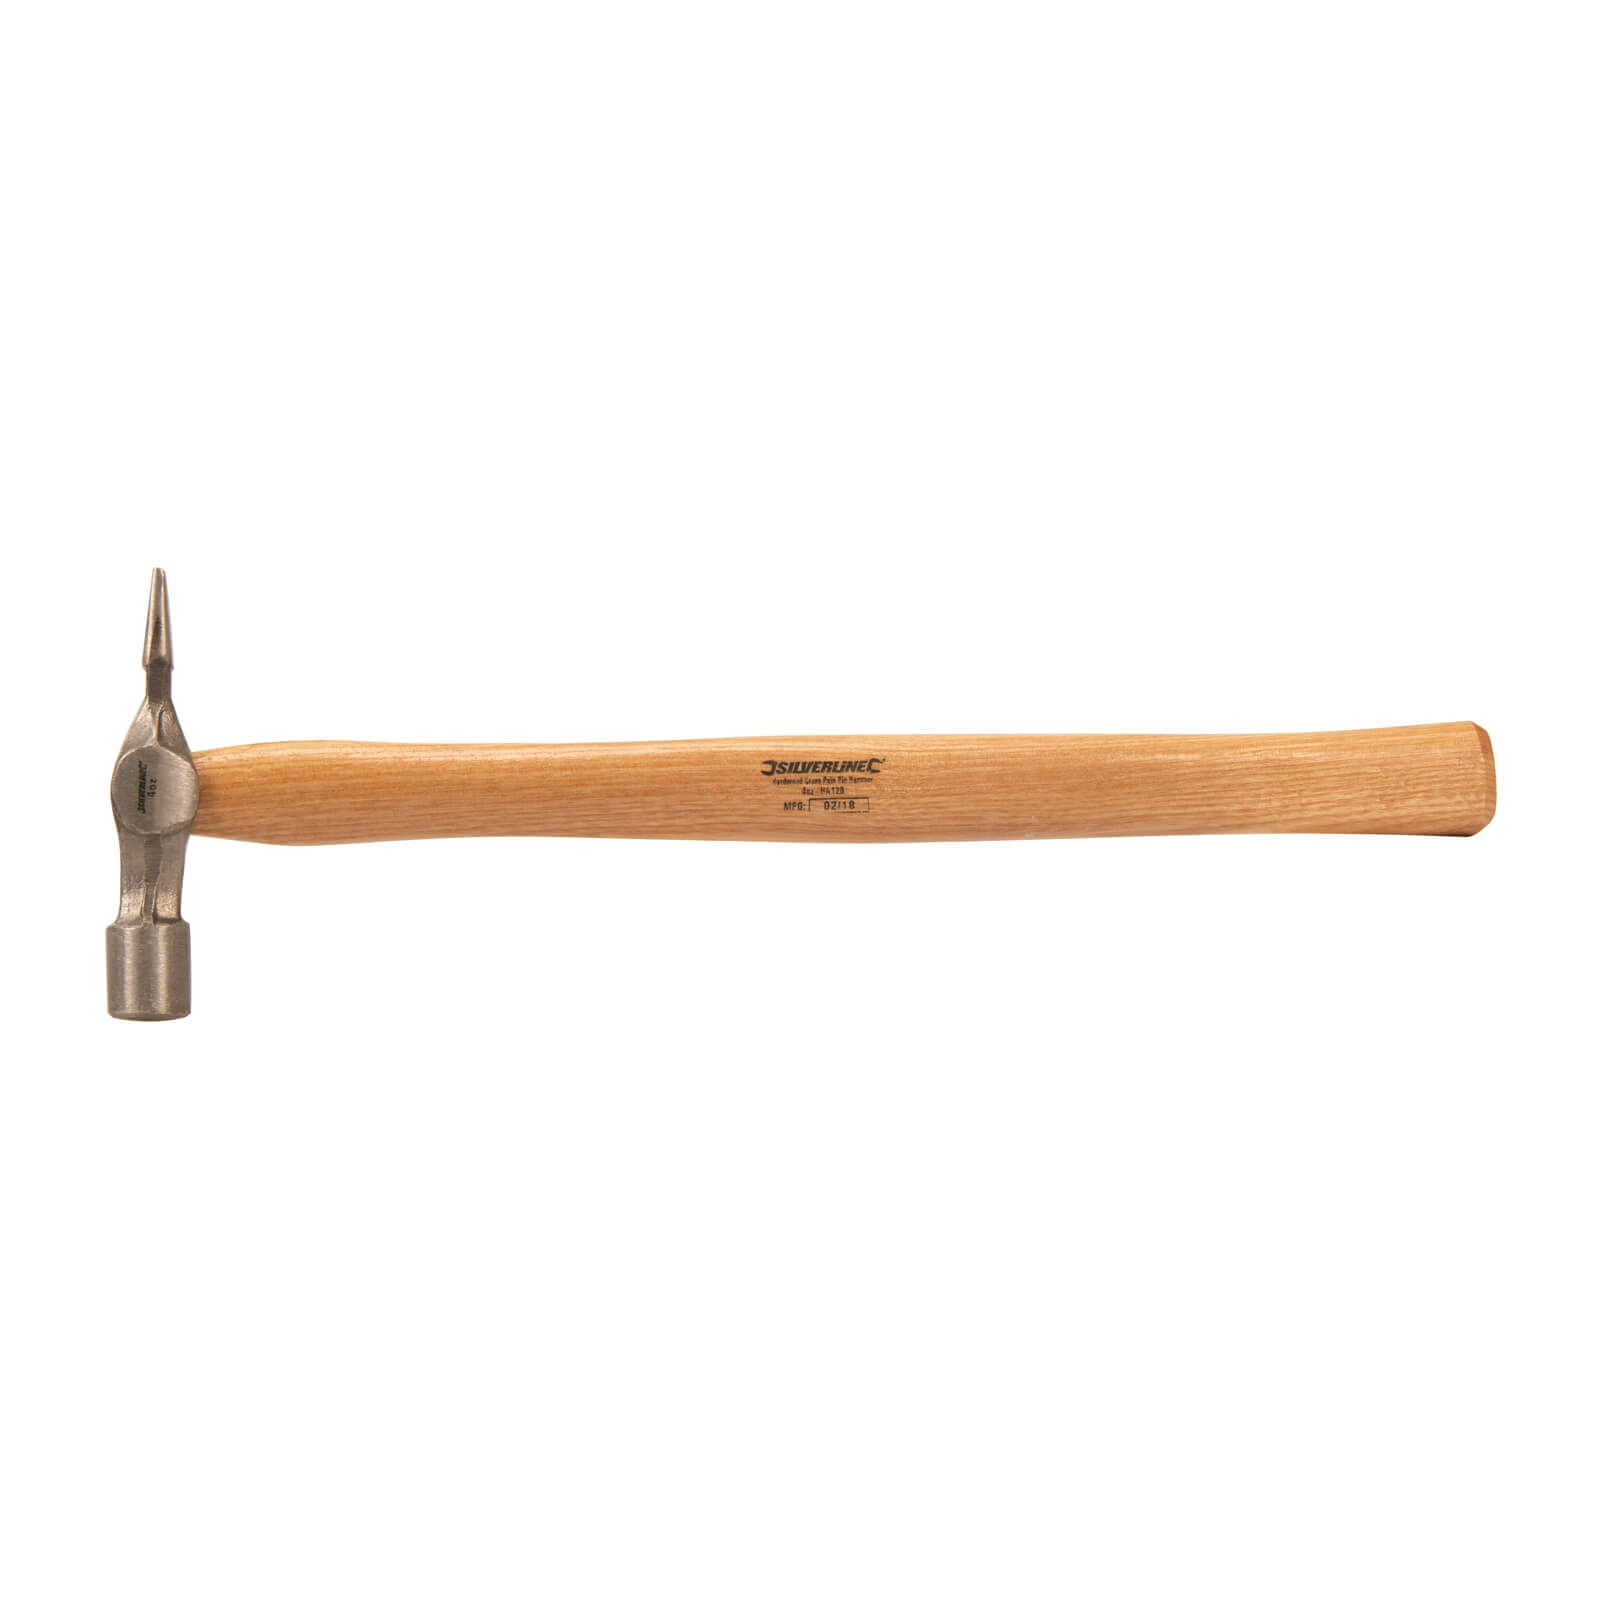 Silverline Hardwood Cross Pein Pin Hammer - 4oz (113g)